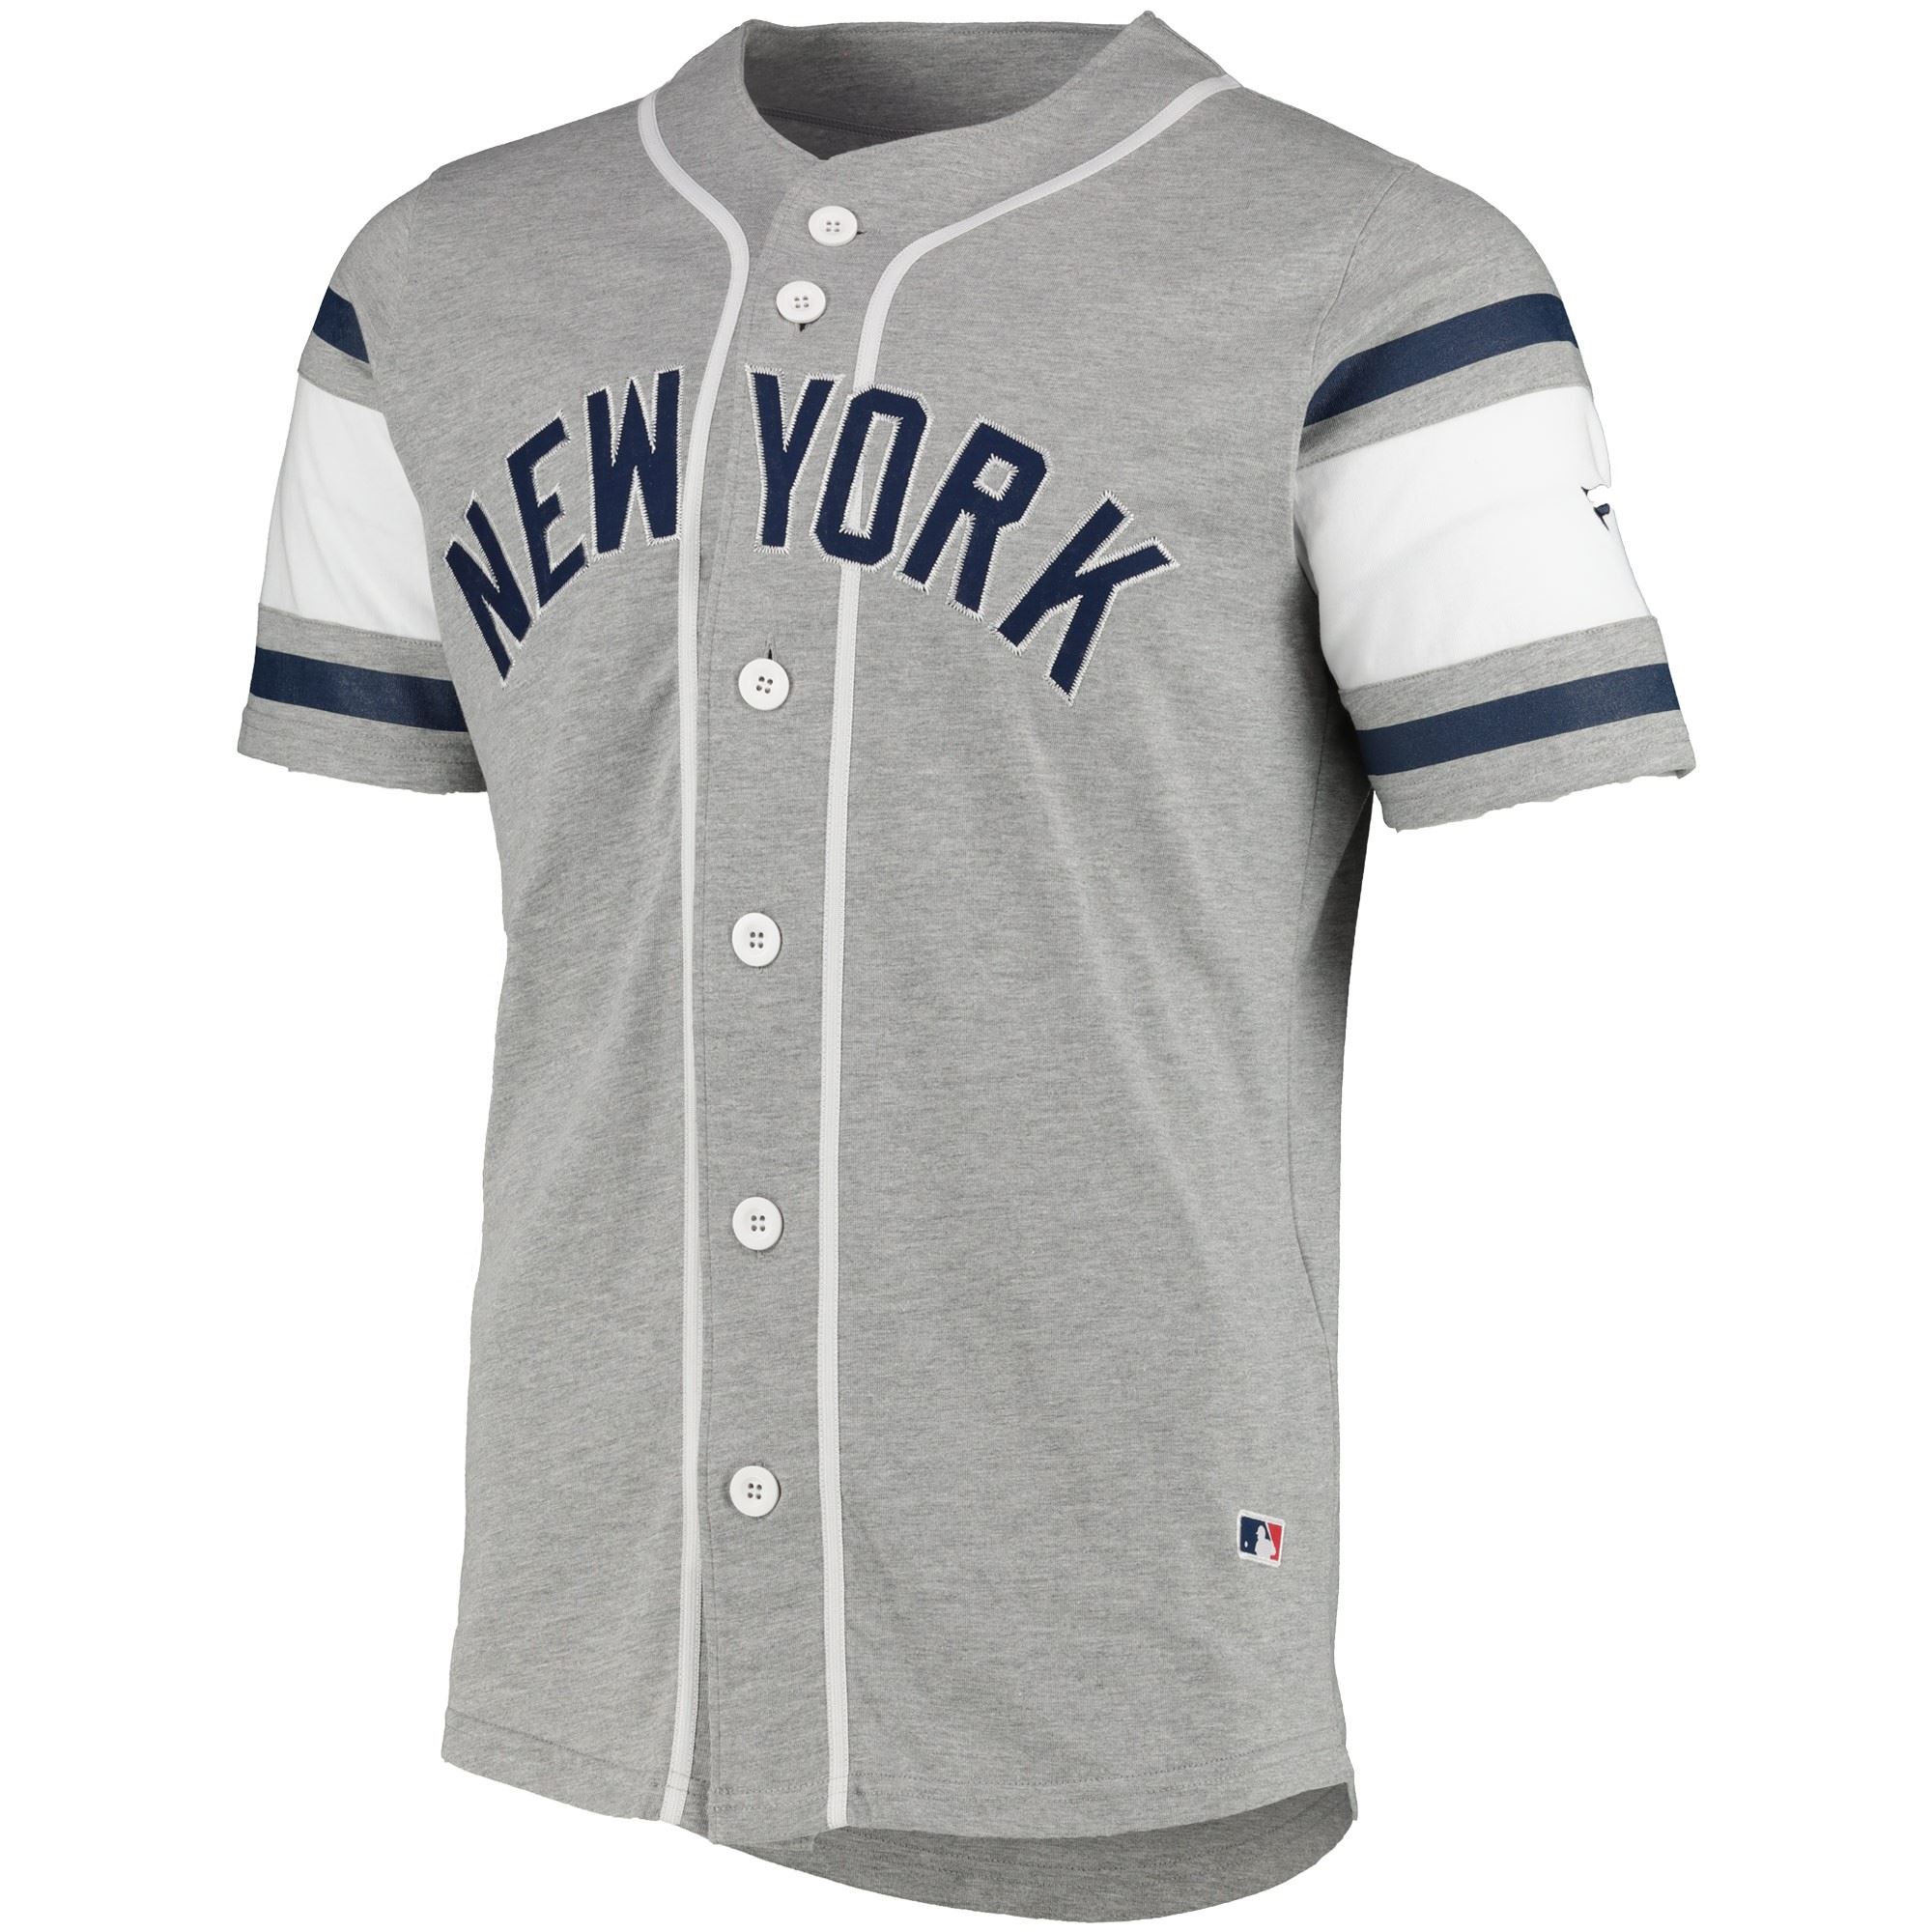 New York Yankees MLB Cotton Supporters Jersey Fanatics